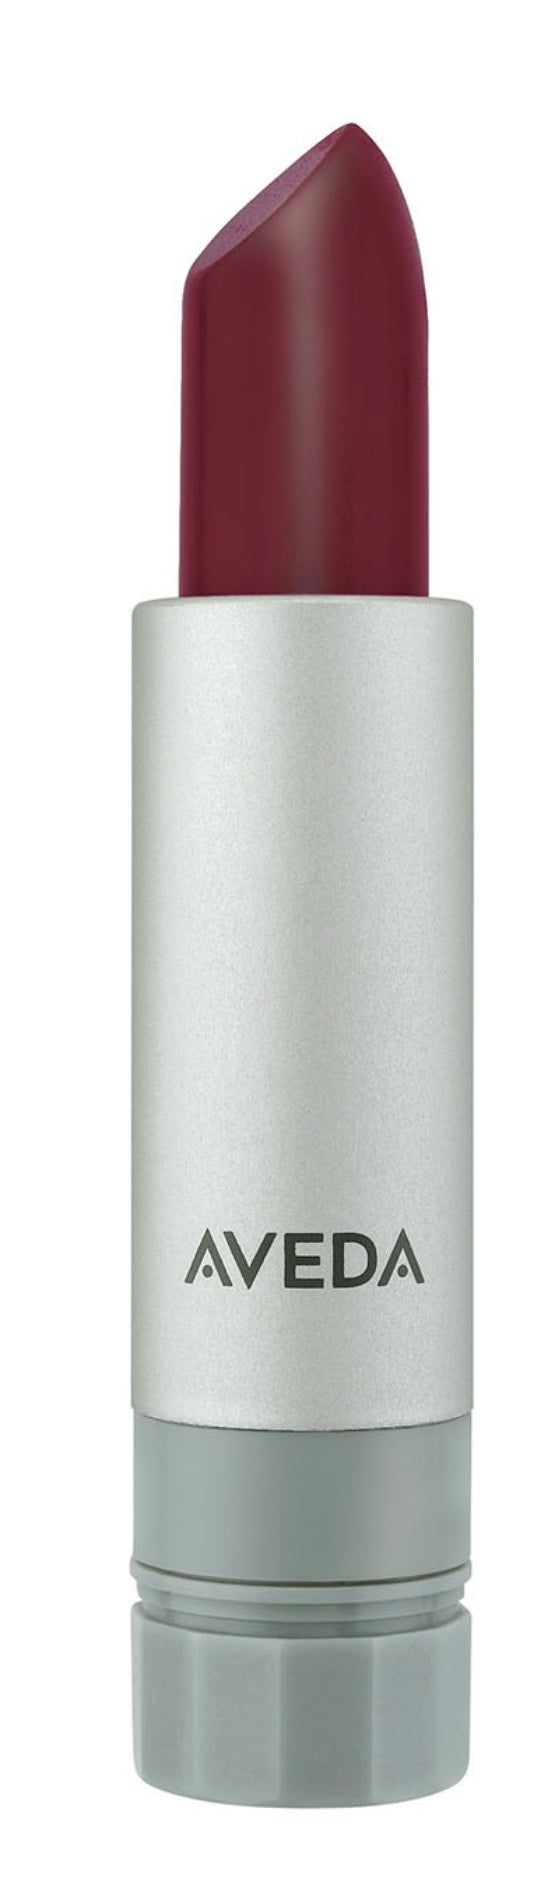 AVEDA new nib lipstick lip color SHEER MUSCADINE 925 Nourish-Mint discontinued